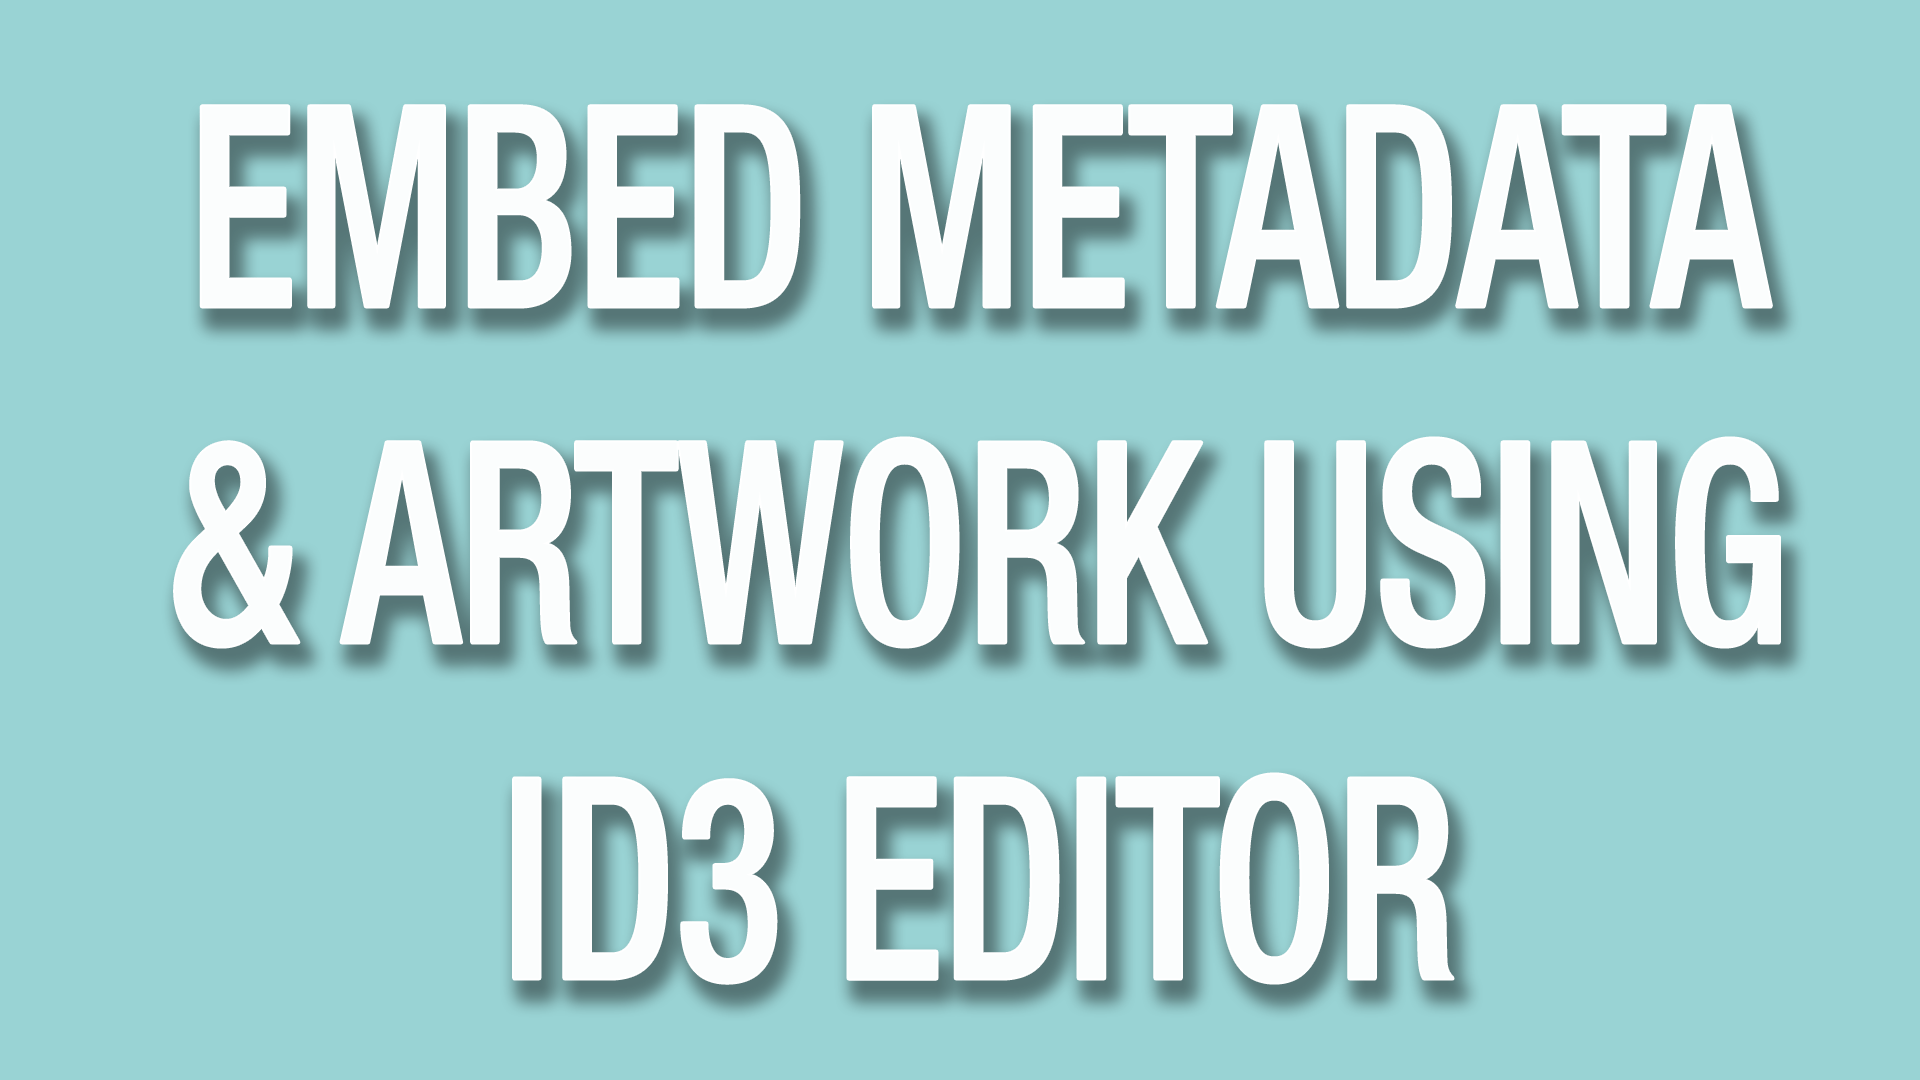 Embed Metadata and Artwork using ID3Editor